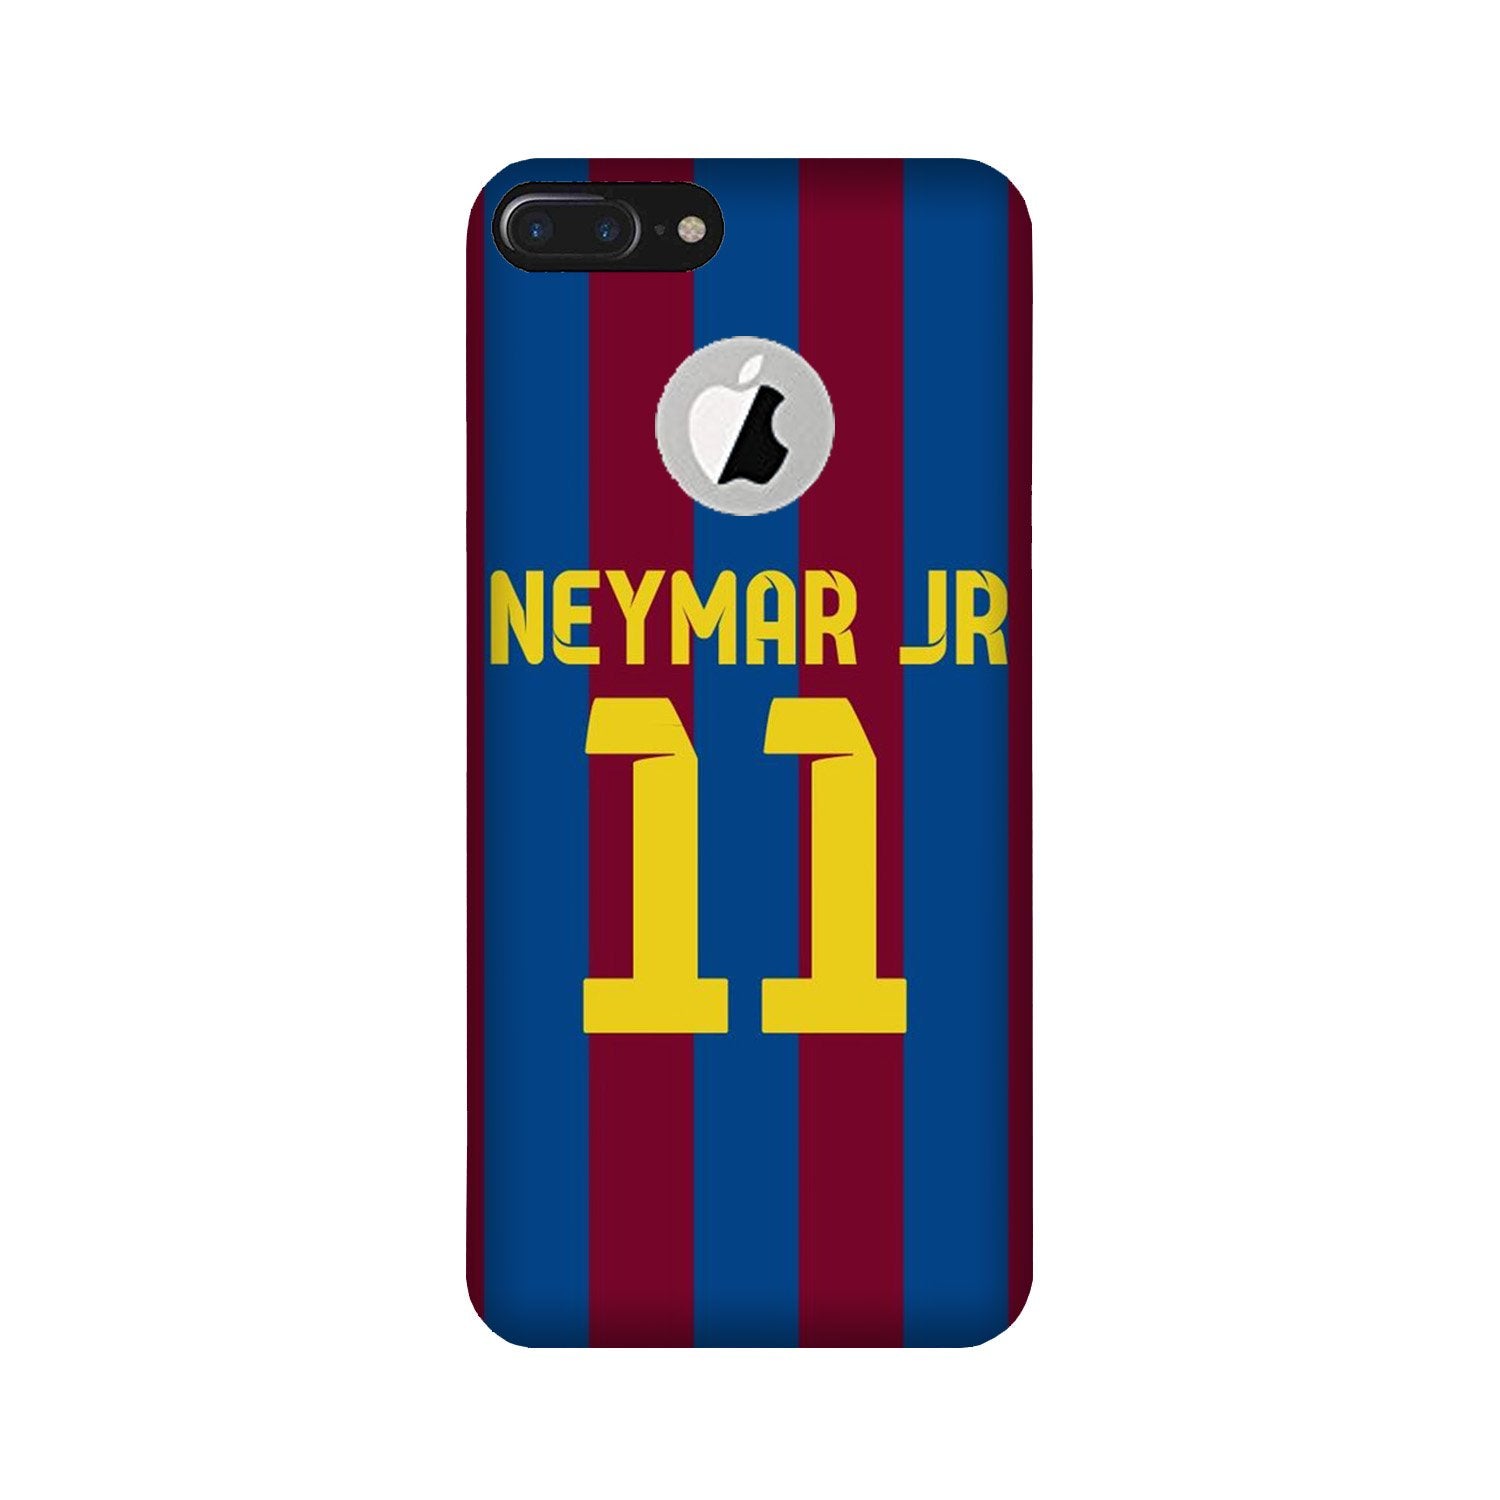 Neymar Jr Case for iPhone 7 Plus logo cut(Design - 162)